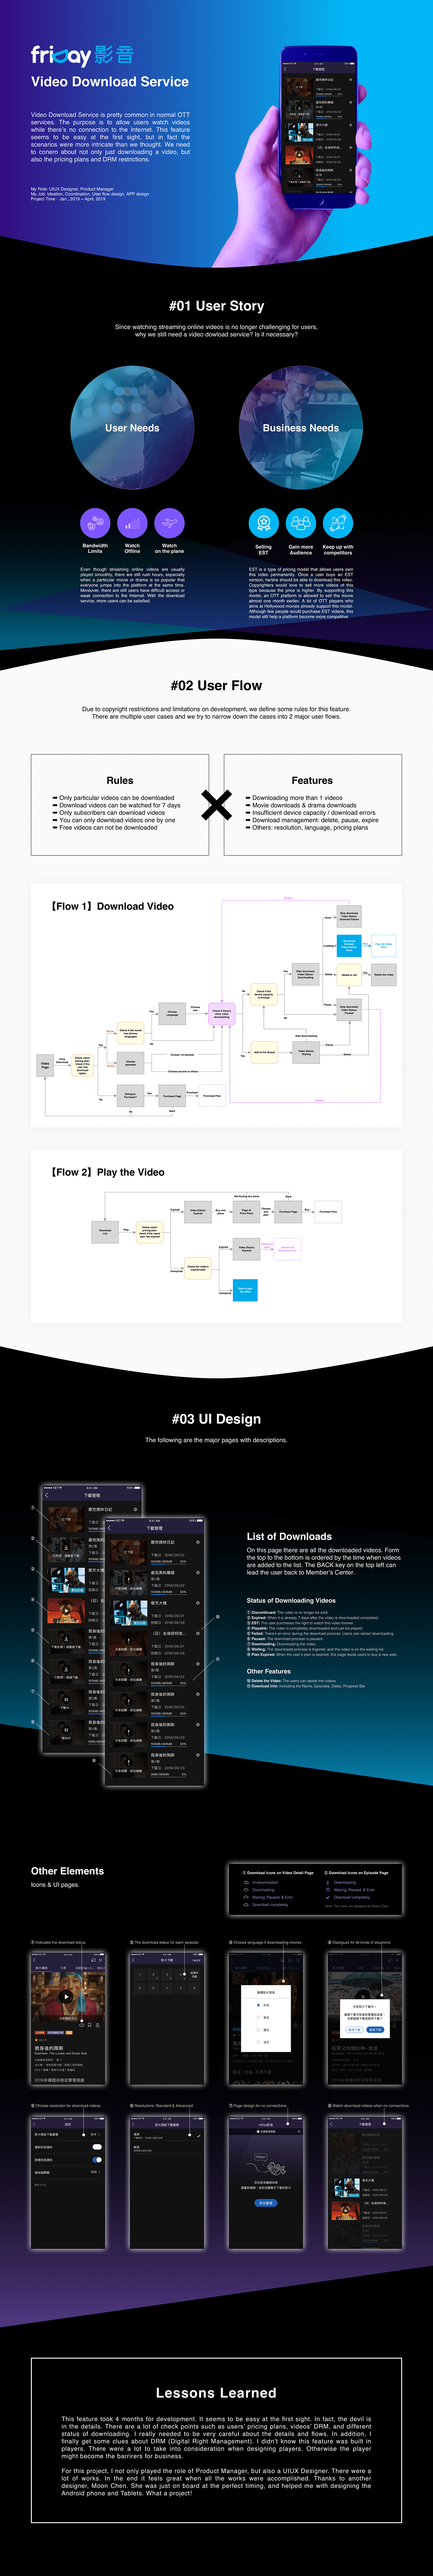 uiux app design OTT video flow design Service design user flow map prototype wireframe